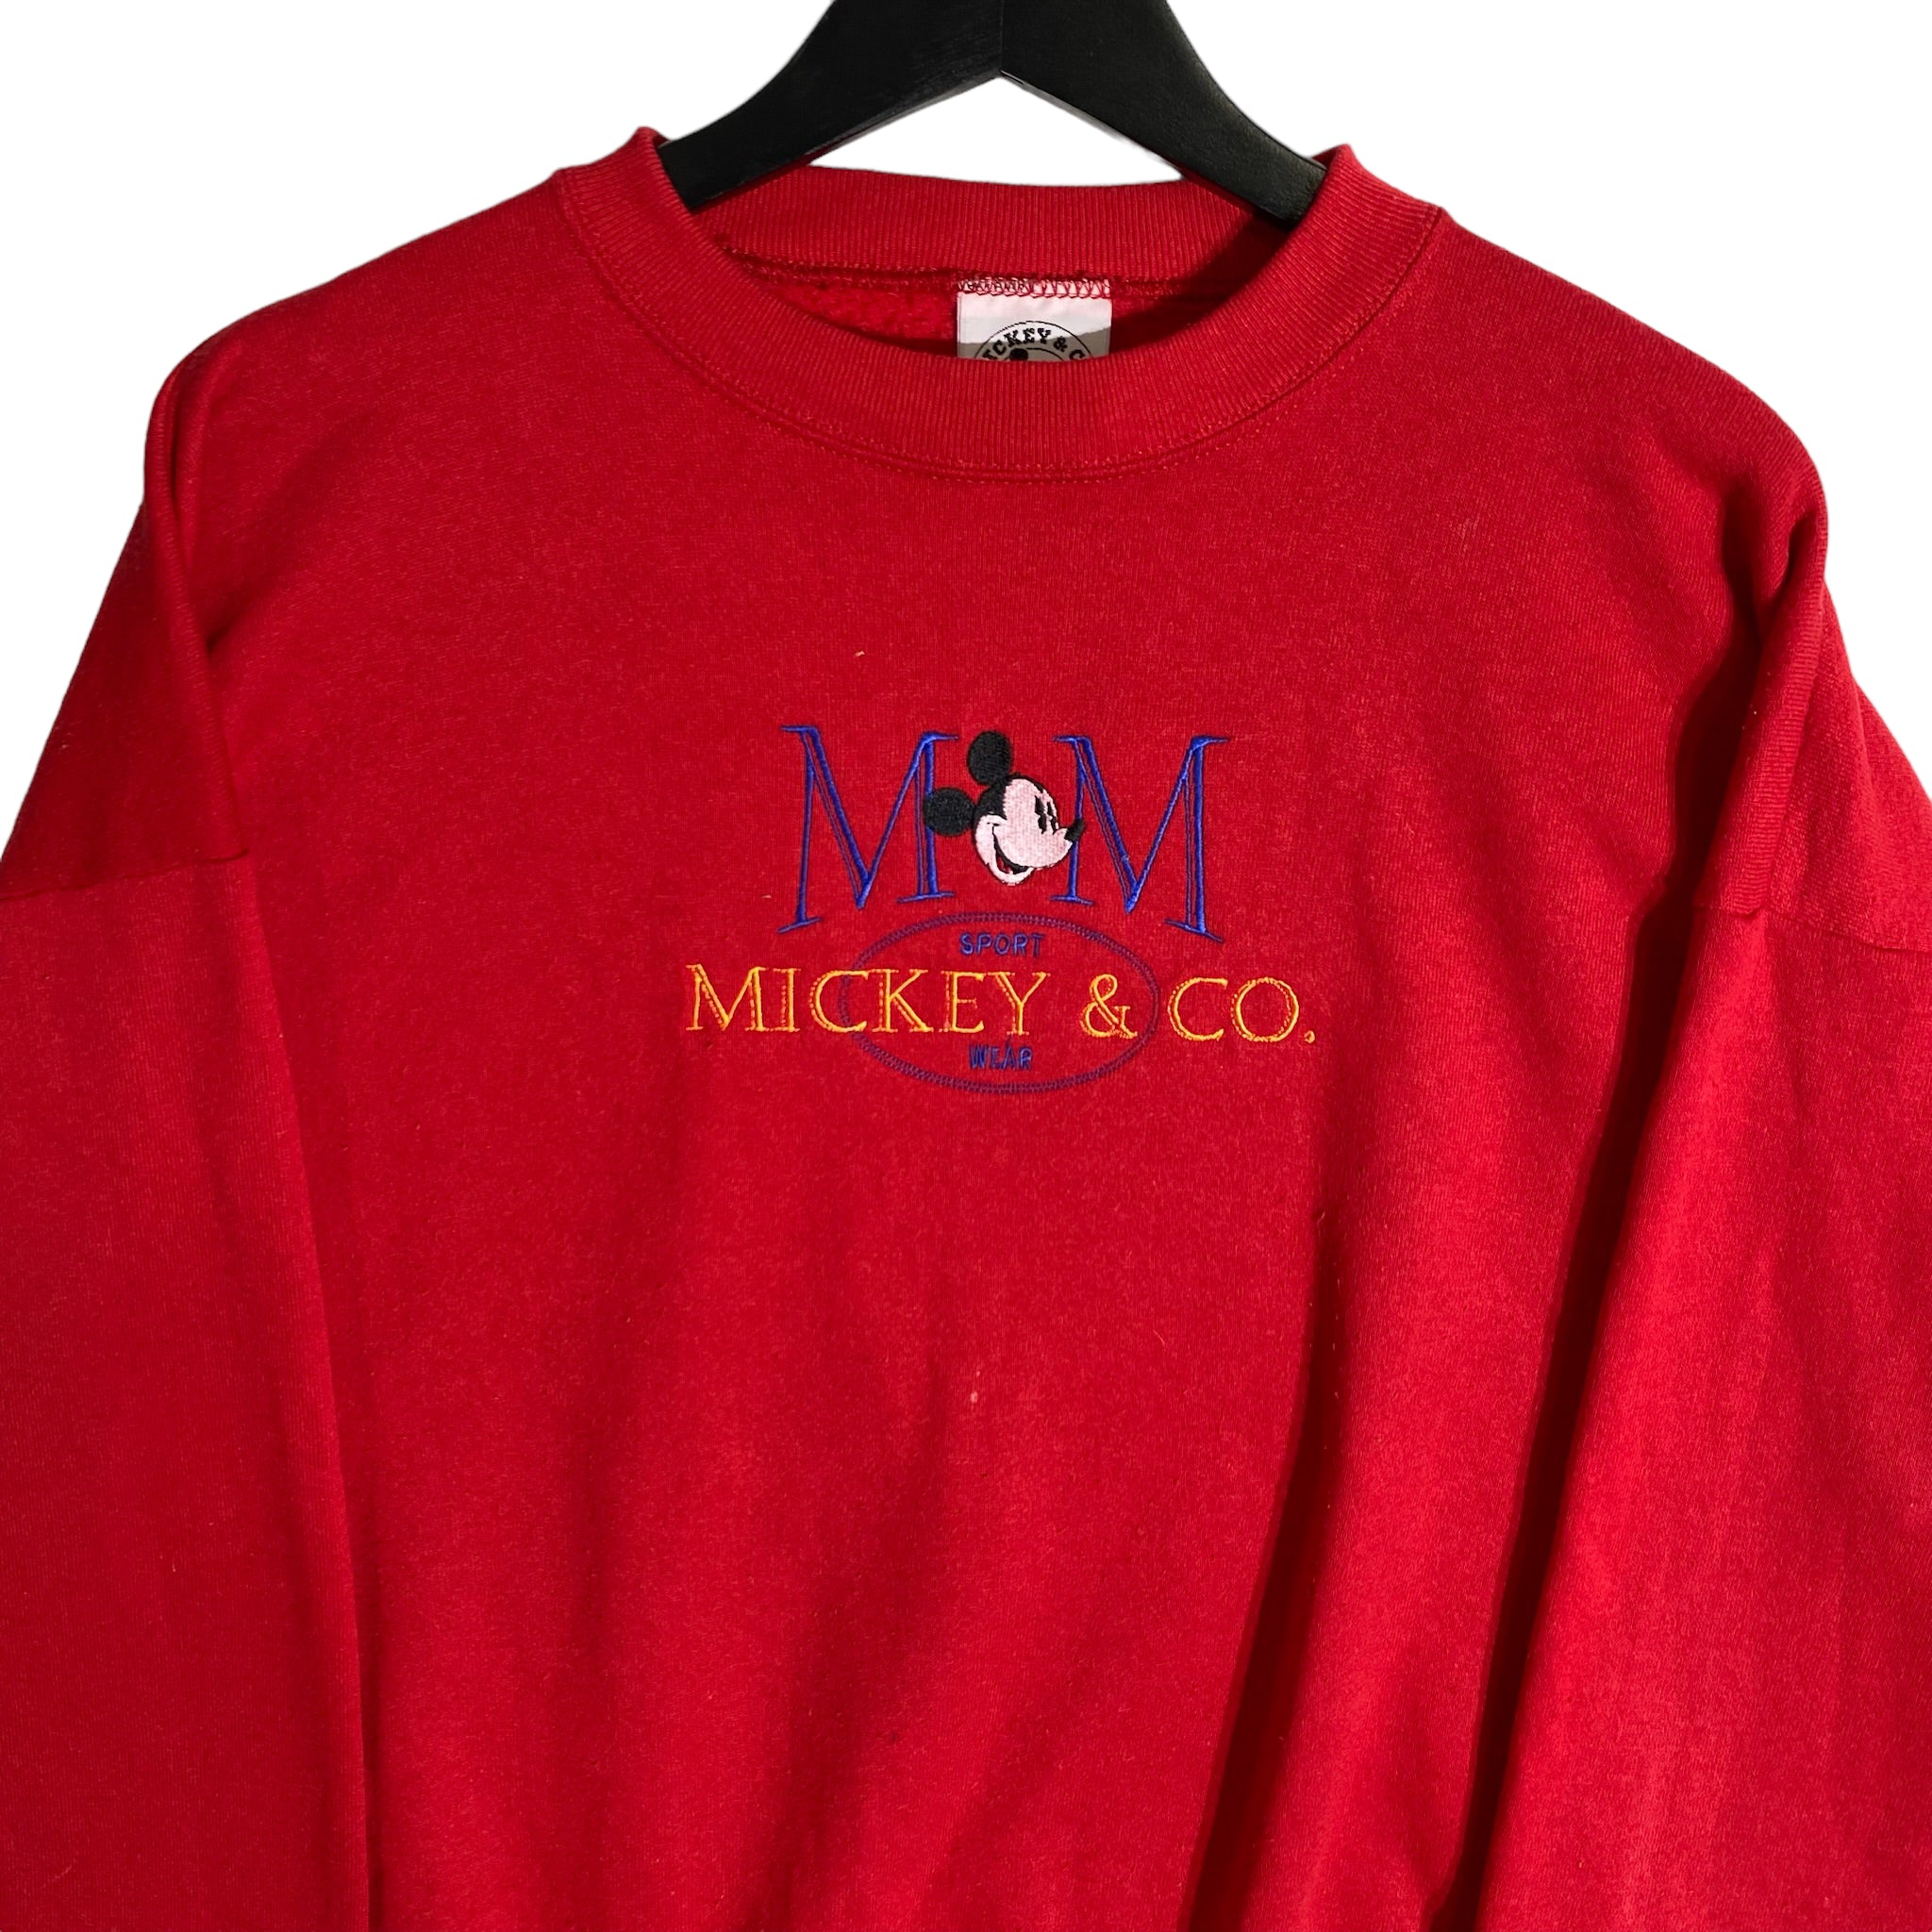 Vintage Embroidered Mickey & Co. Crewneck